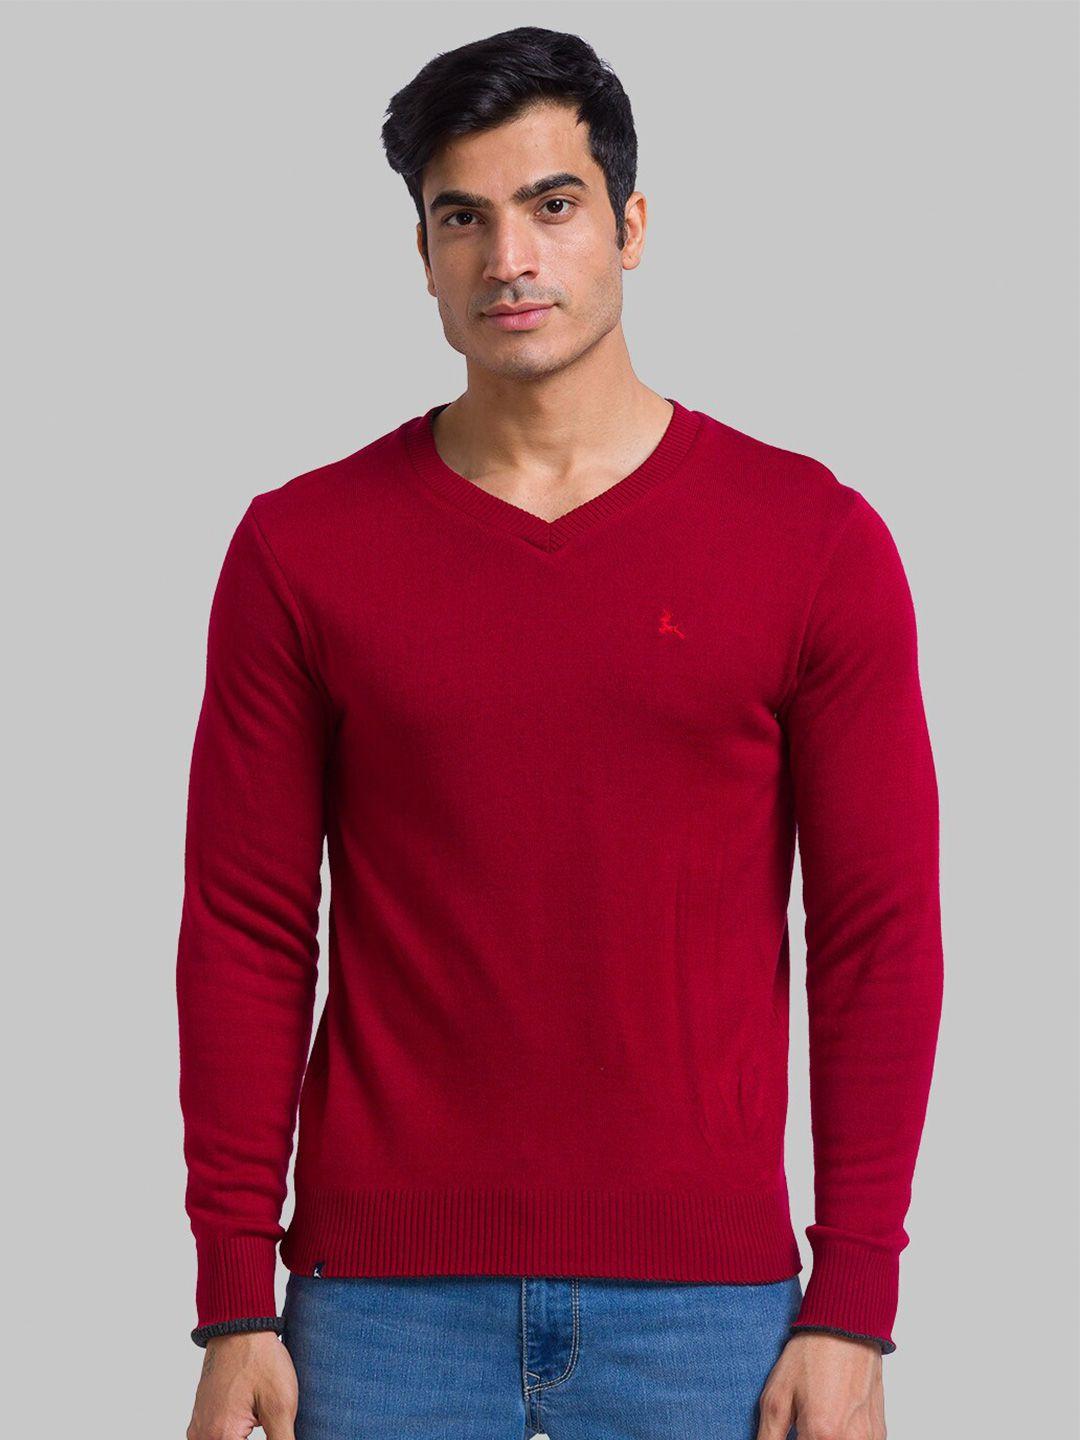 parx-men-v-neck-pullover-acrylic-sweater